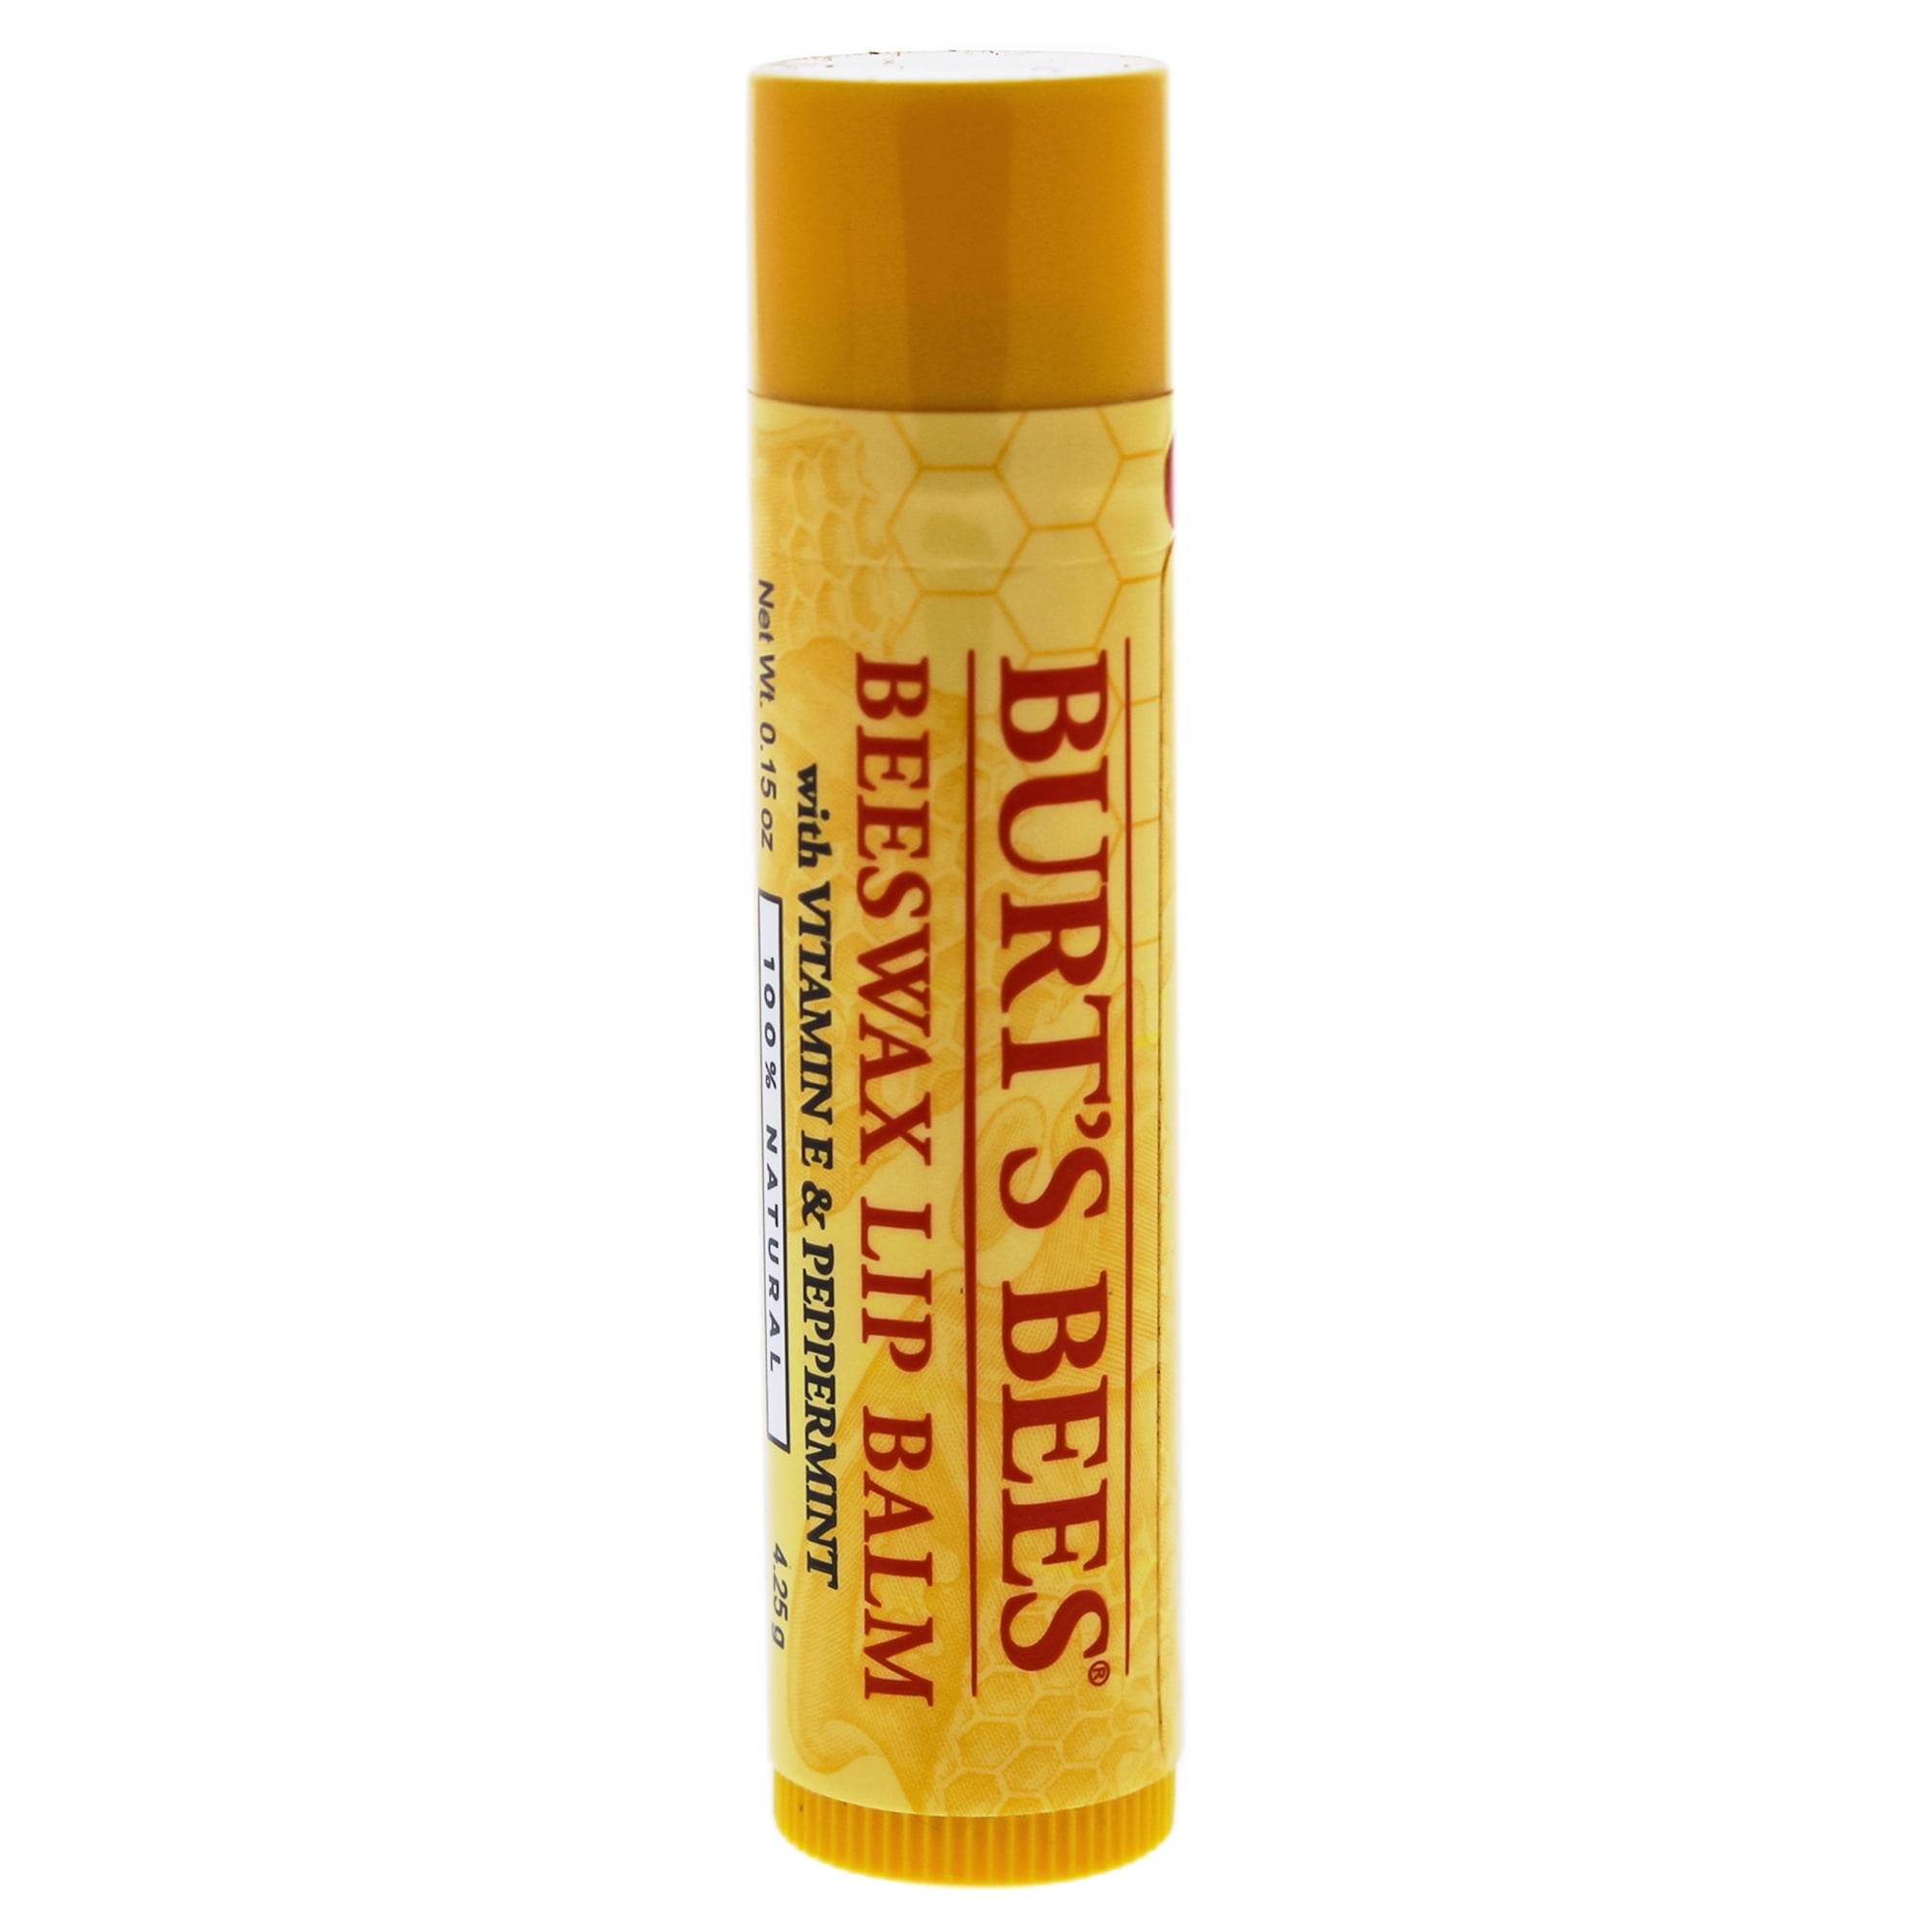 Burt's Bees 100% Natural Origin Moisturizing Lip Balm - Multipack - Shop  Lip Balm & Treatments at H-E-B